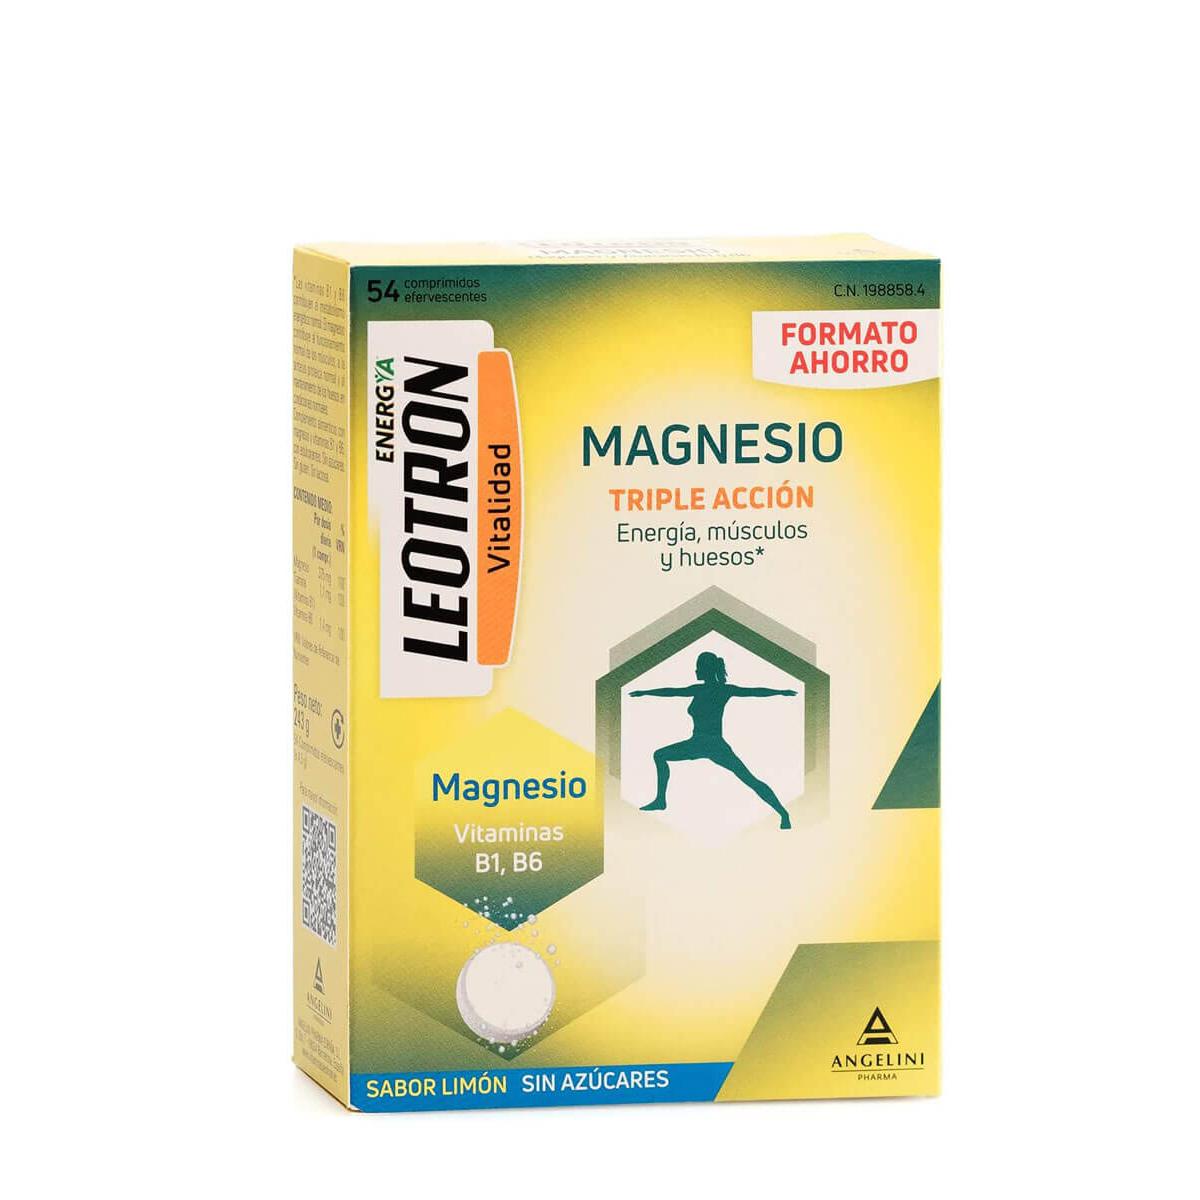 Leotron - Leotron magnesio sabor limón 54 comprimidos efervescentes